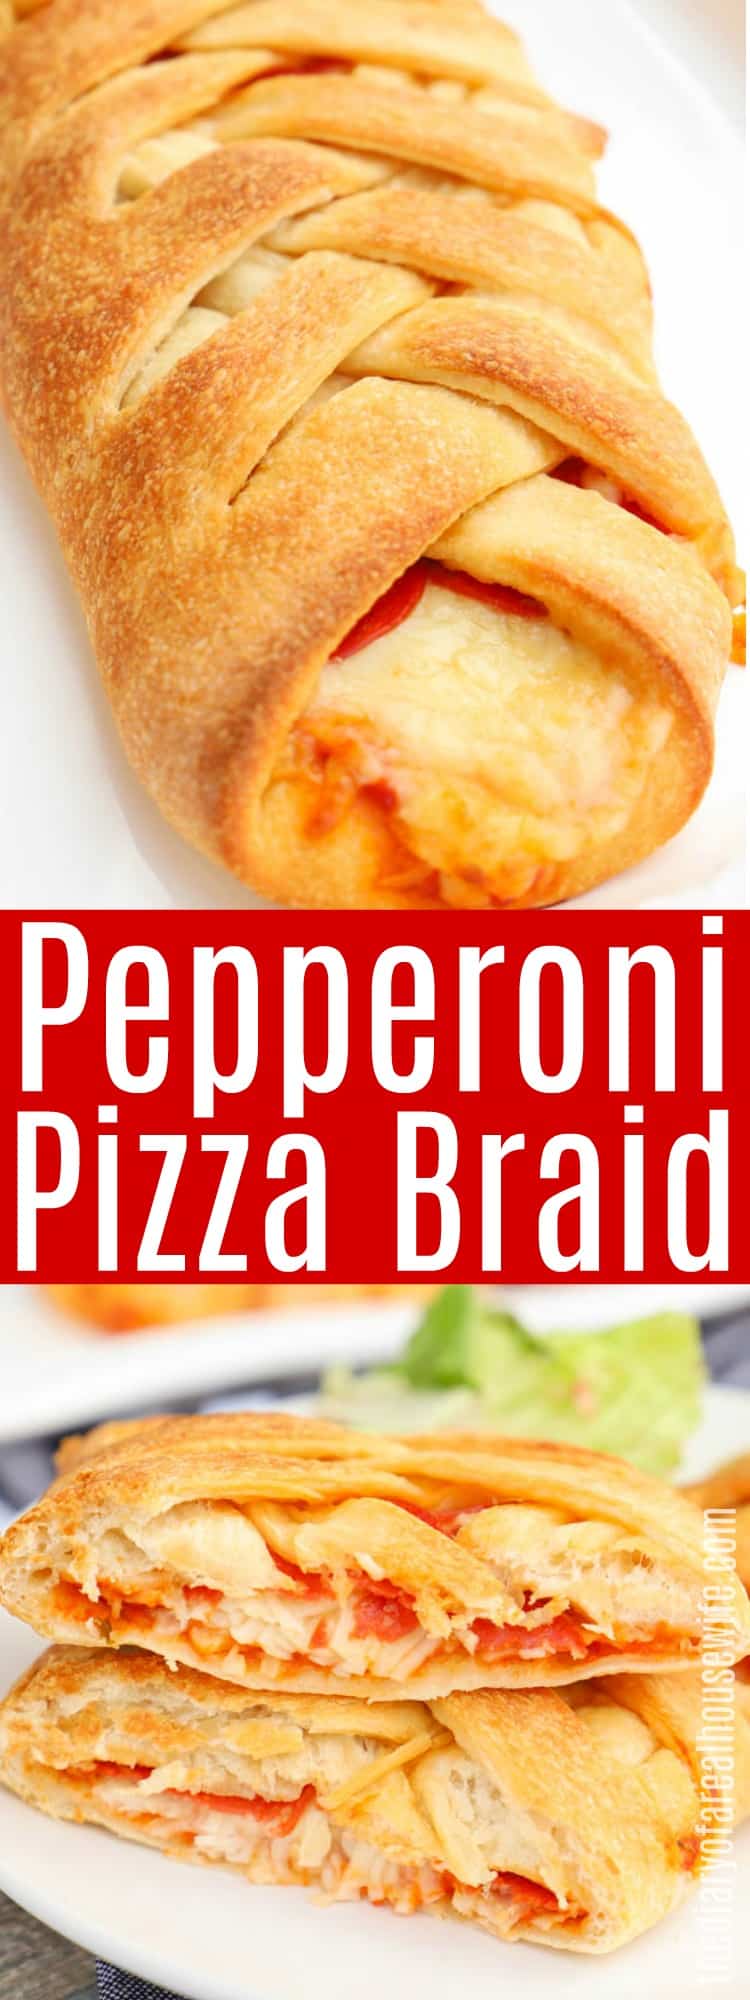 Pepperoni Pizza Braid